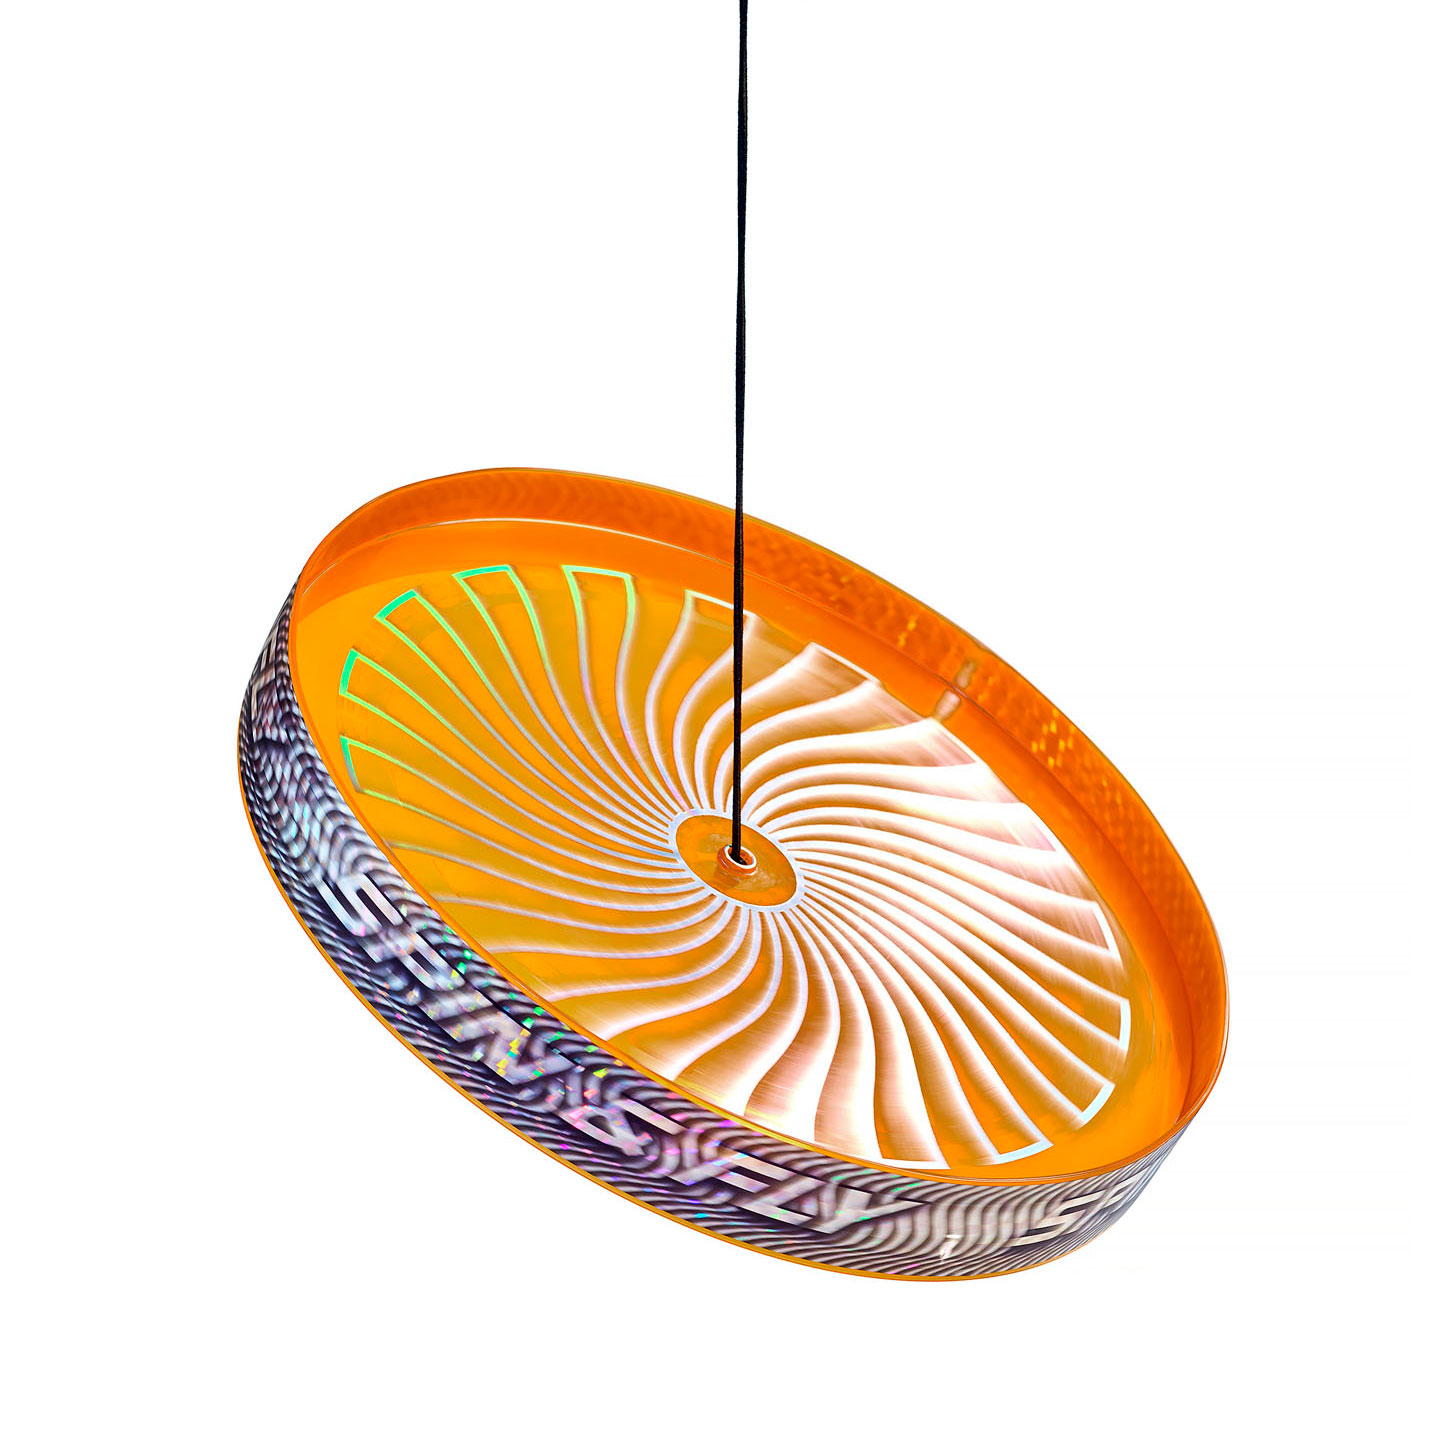 Acrobat Spin & Fly Jongleerfrisbee - Oranje